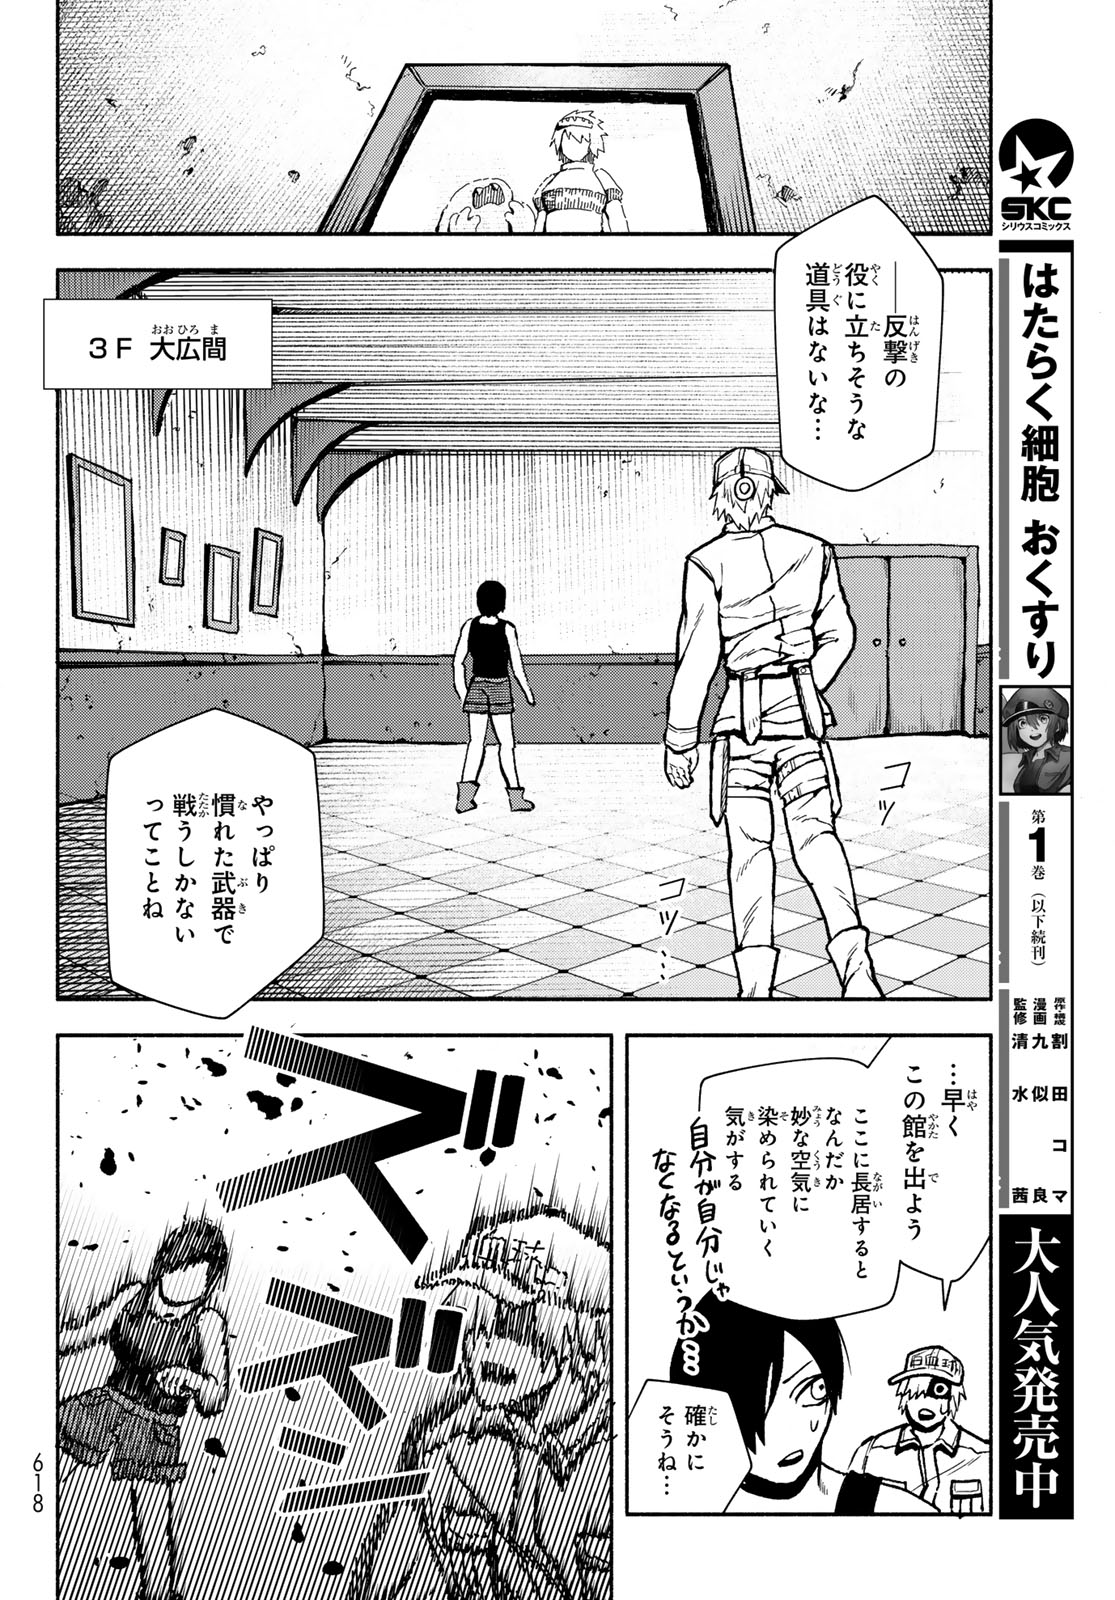 Hataraku Saibou Okusuri - Chapter 10 - Page 20